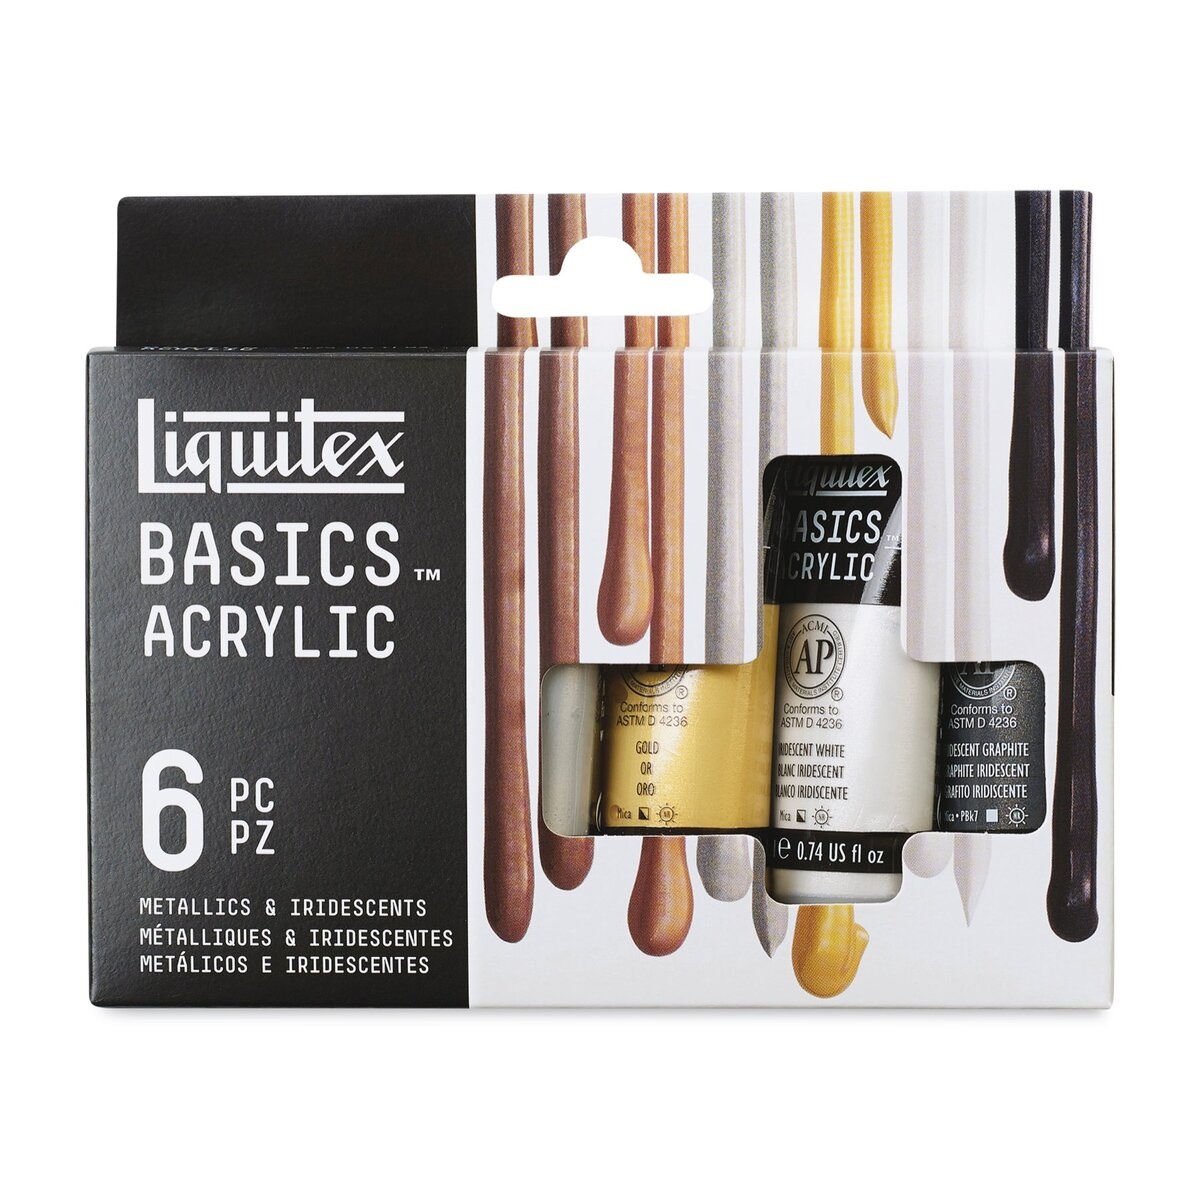 Liquitex BASICS® Acrylic Paint, 8.5oz.